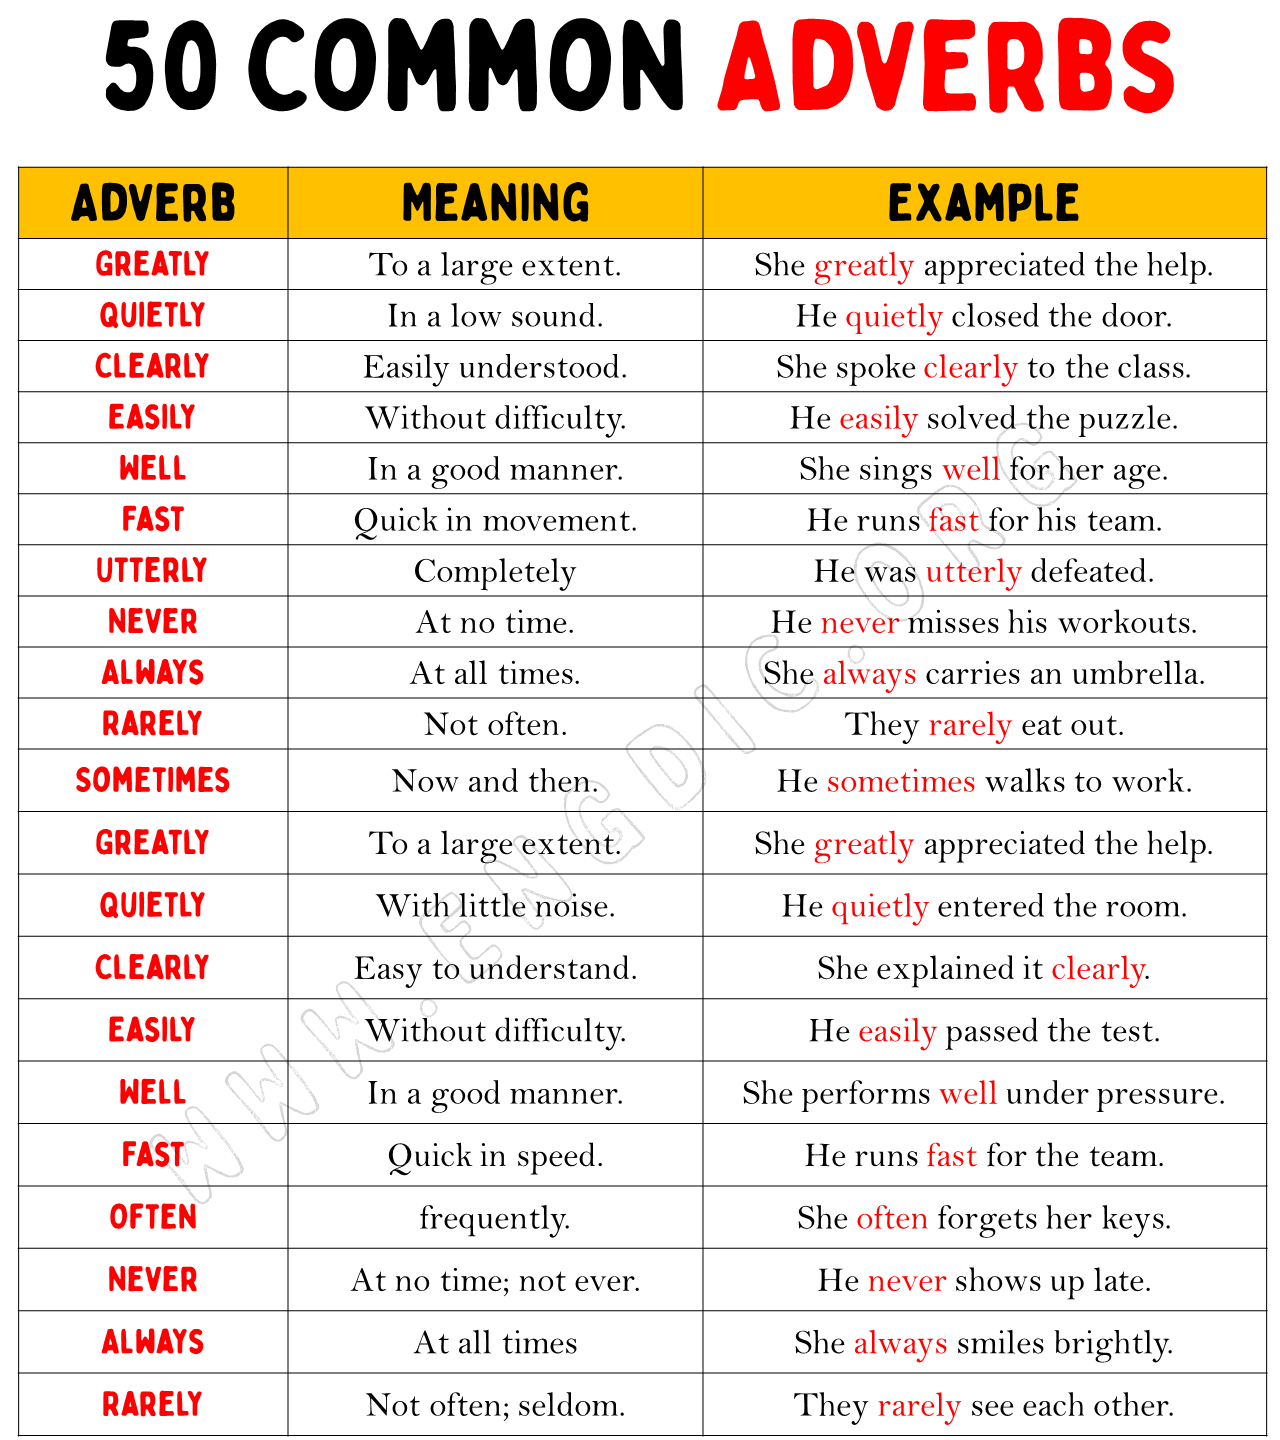 50 Common Adverbs